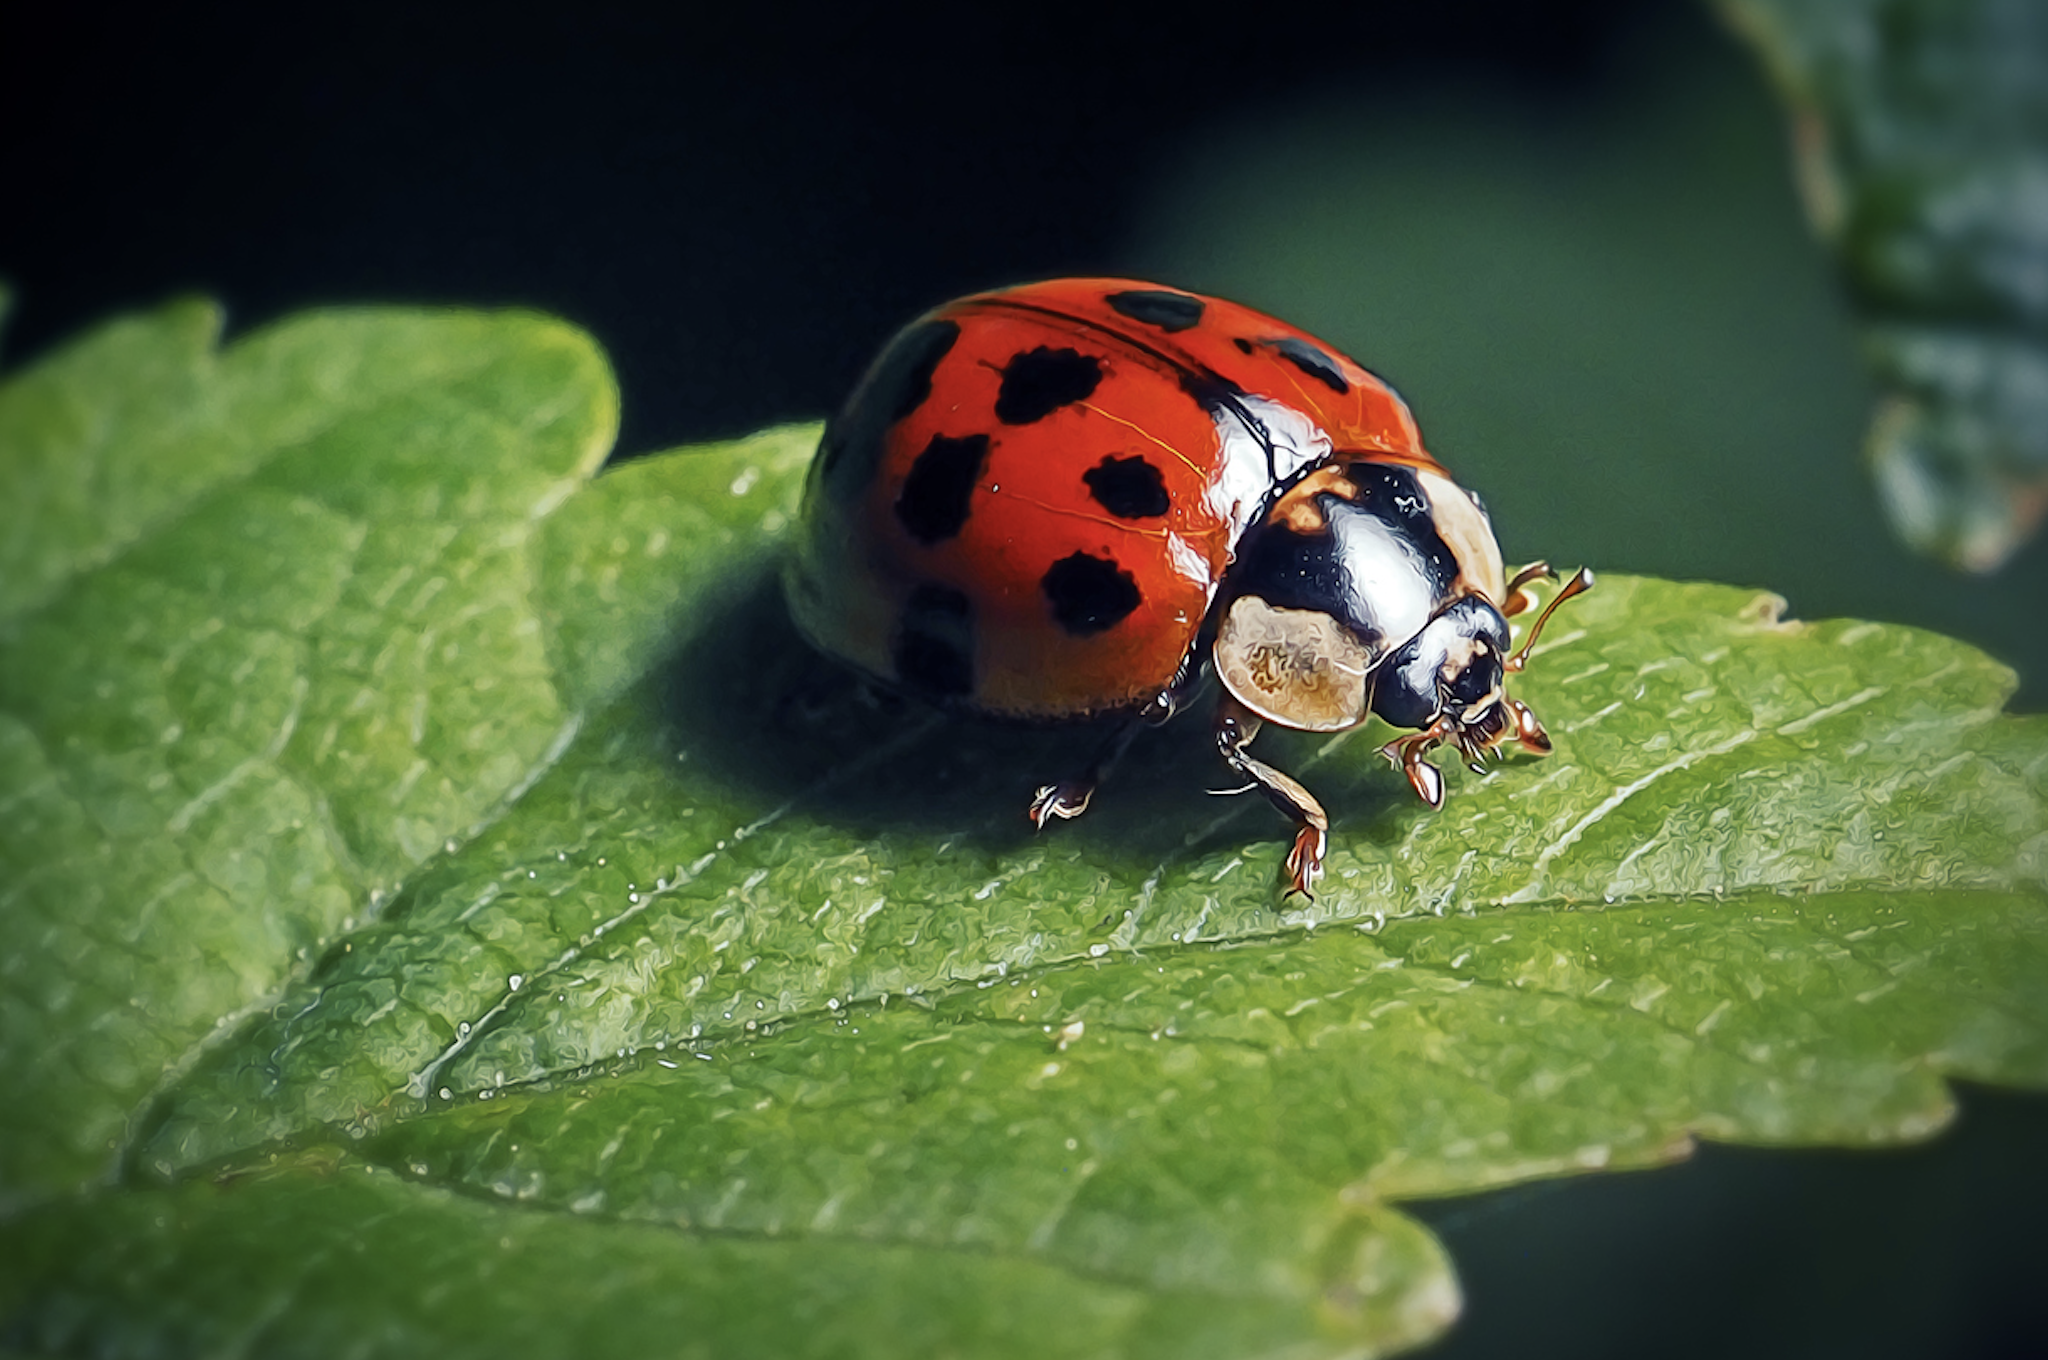 Ladybug in Victoria